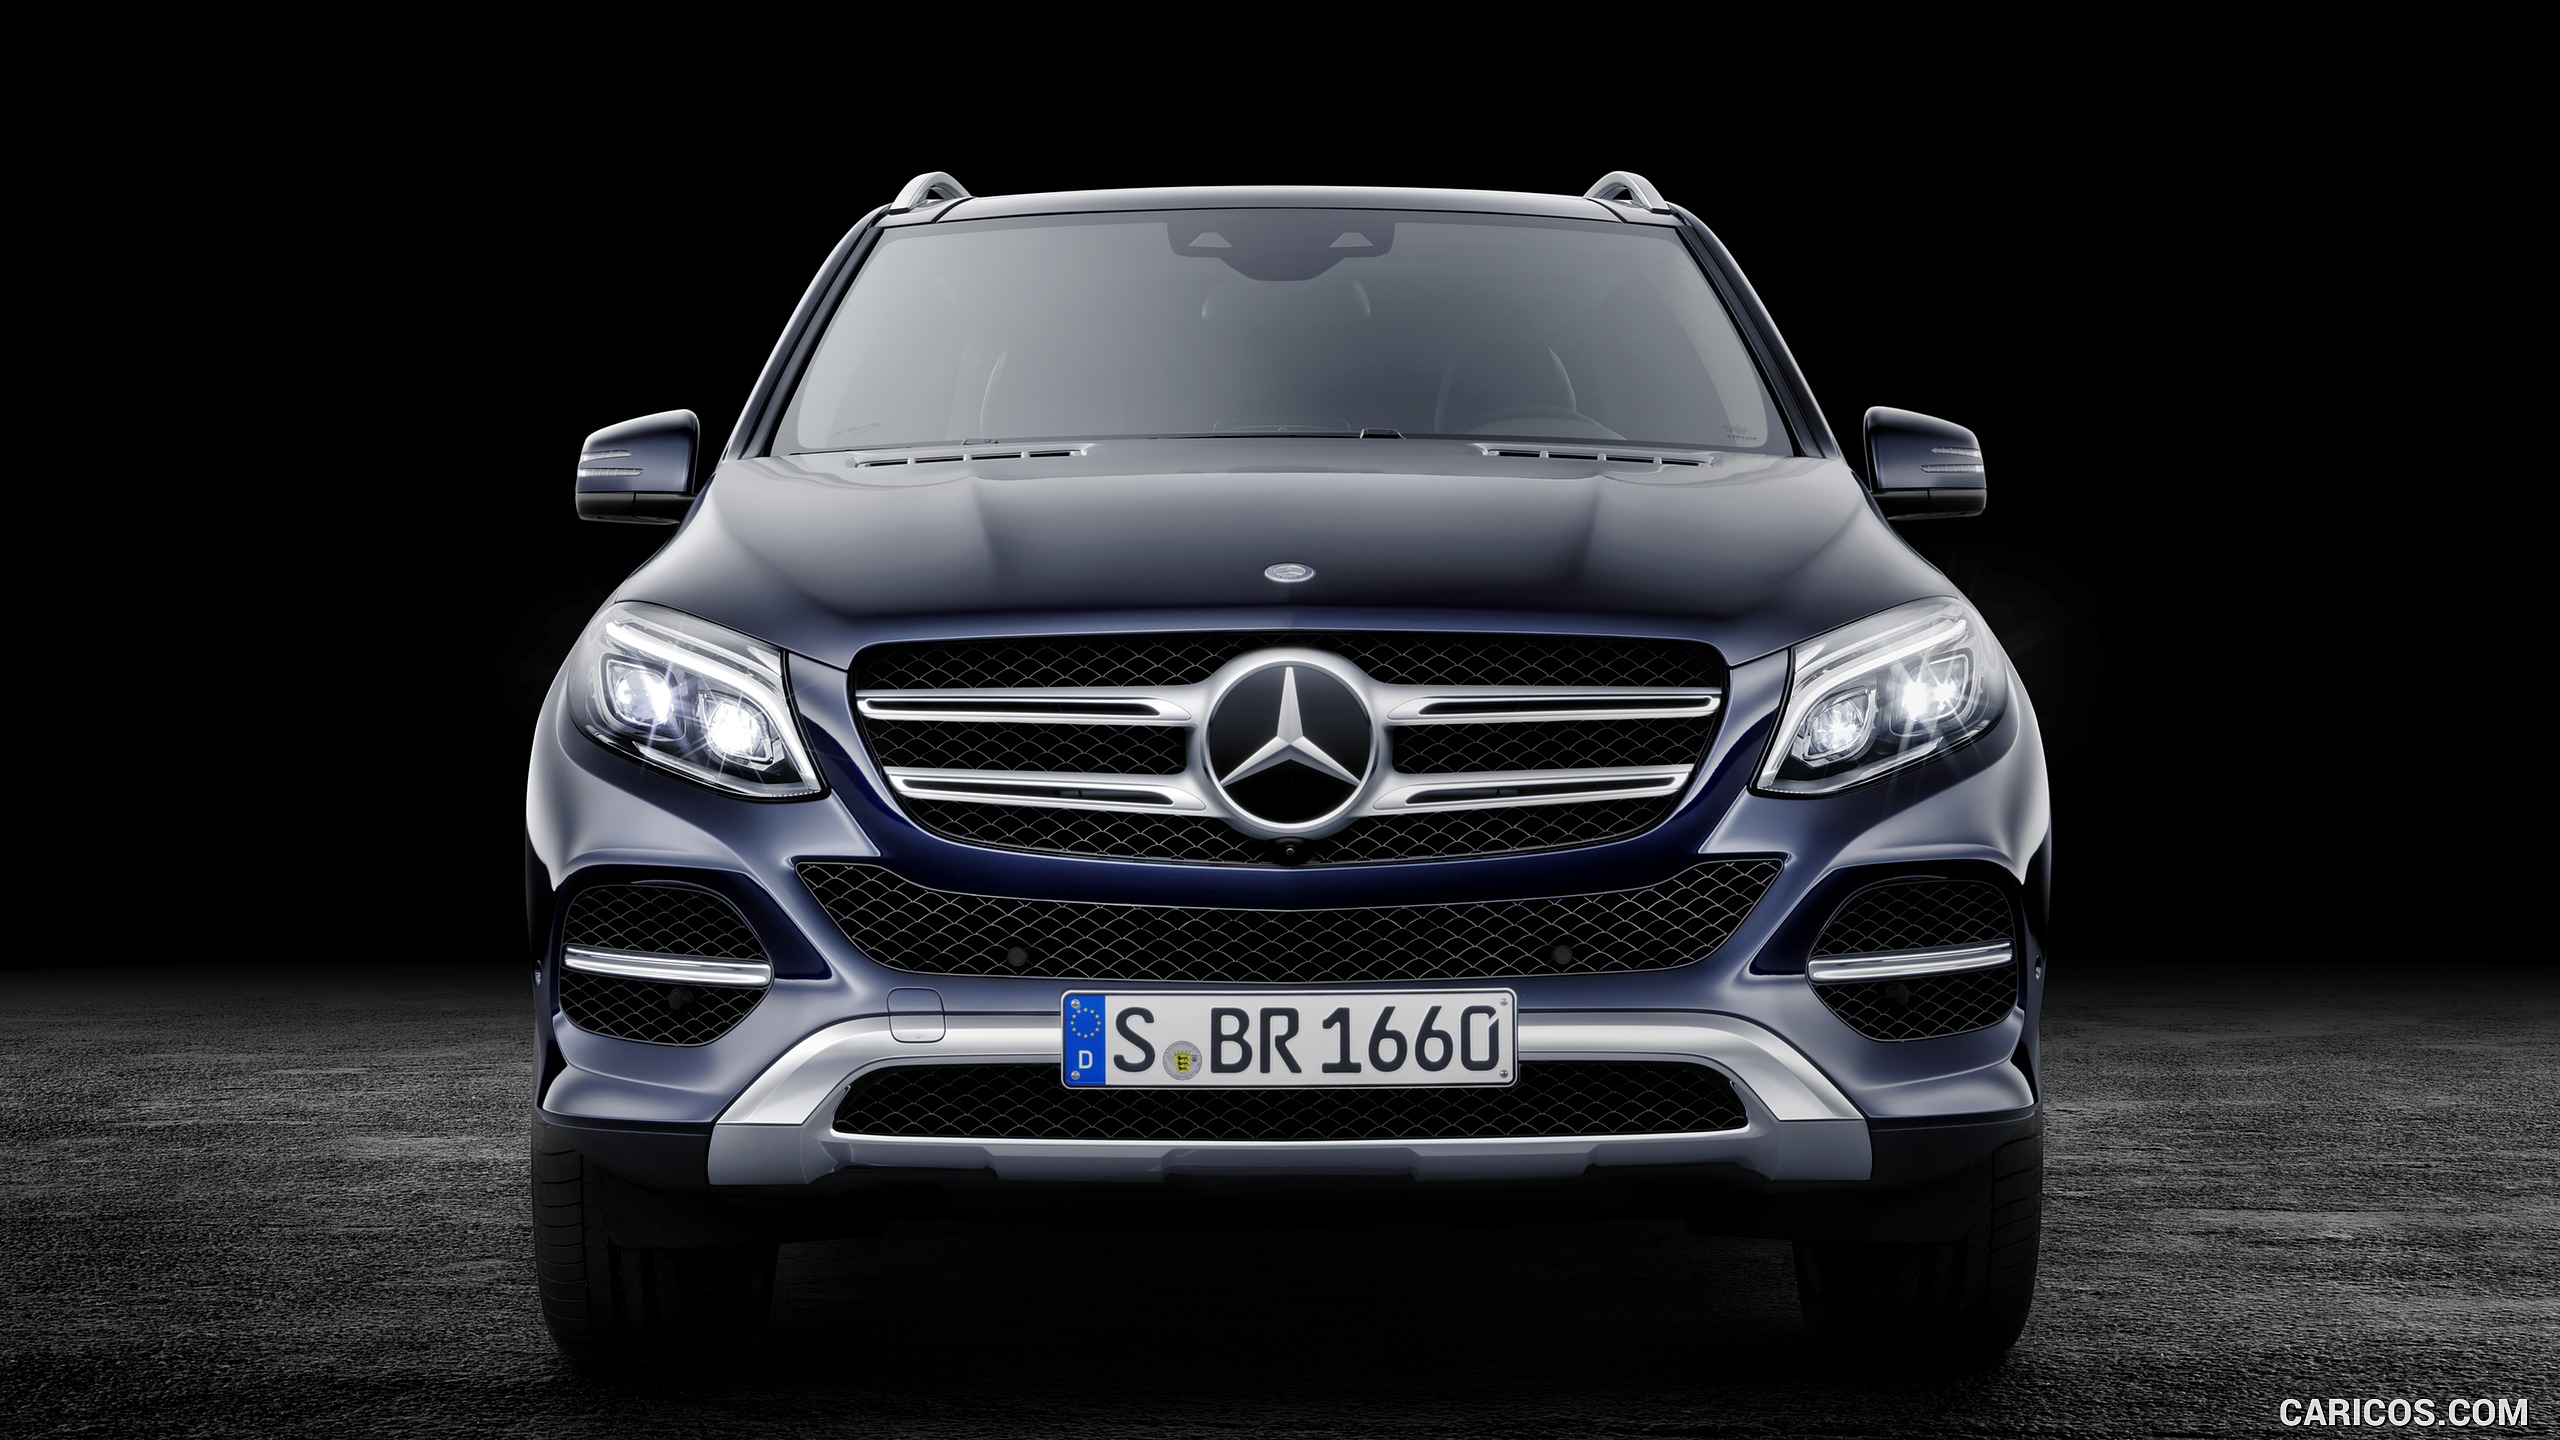 2016 Mercedes-Benz GLE-Class GLE 250 d (Cavansite Blue Metallic) - Front, #47 of 141